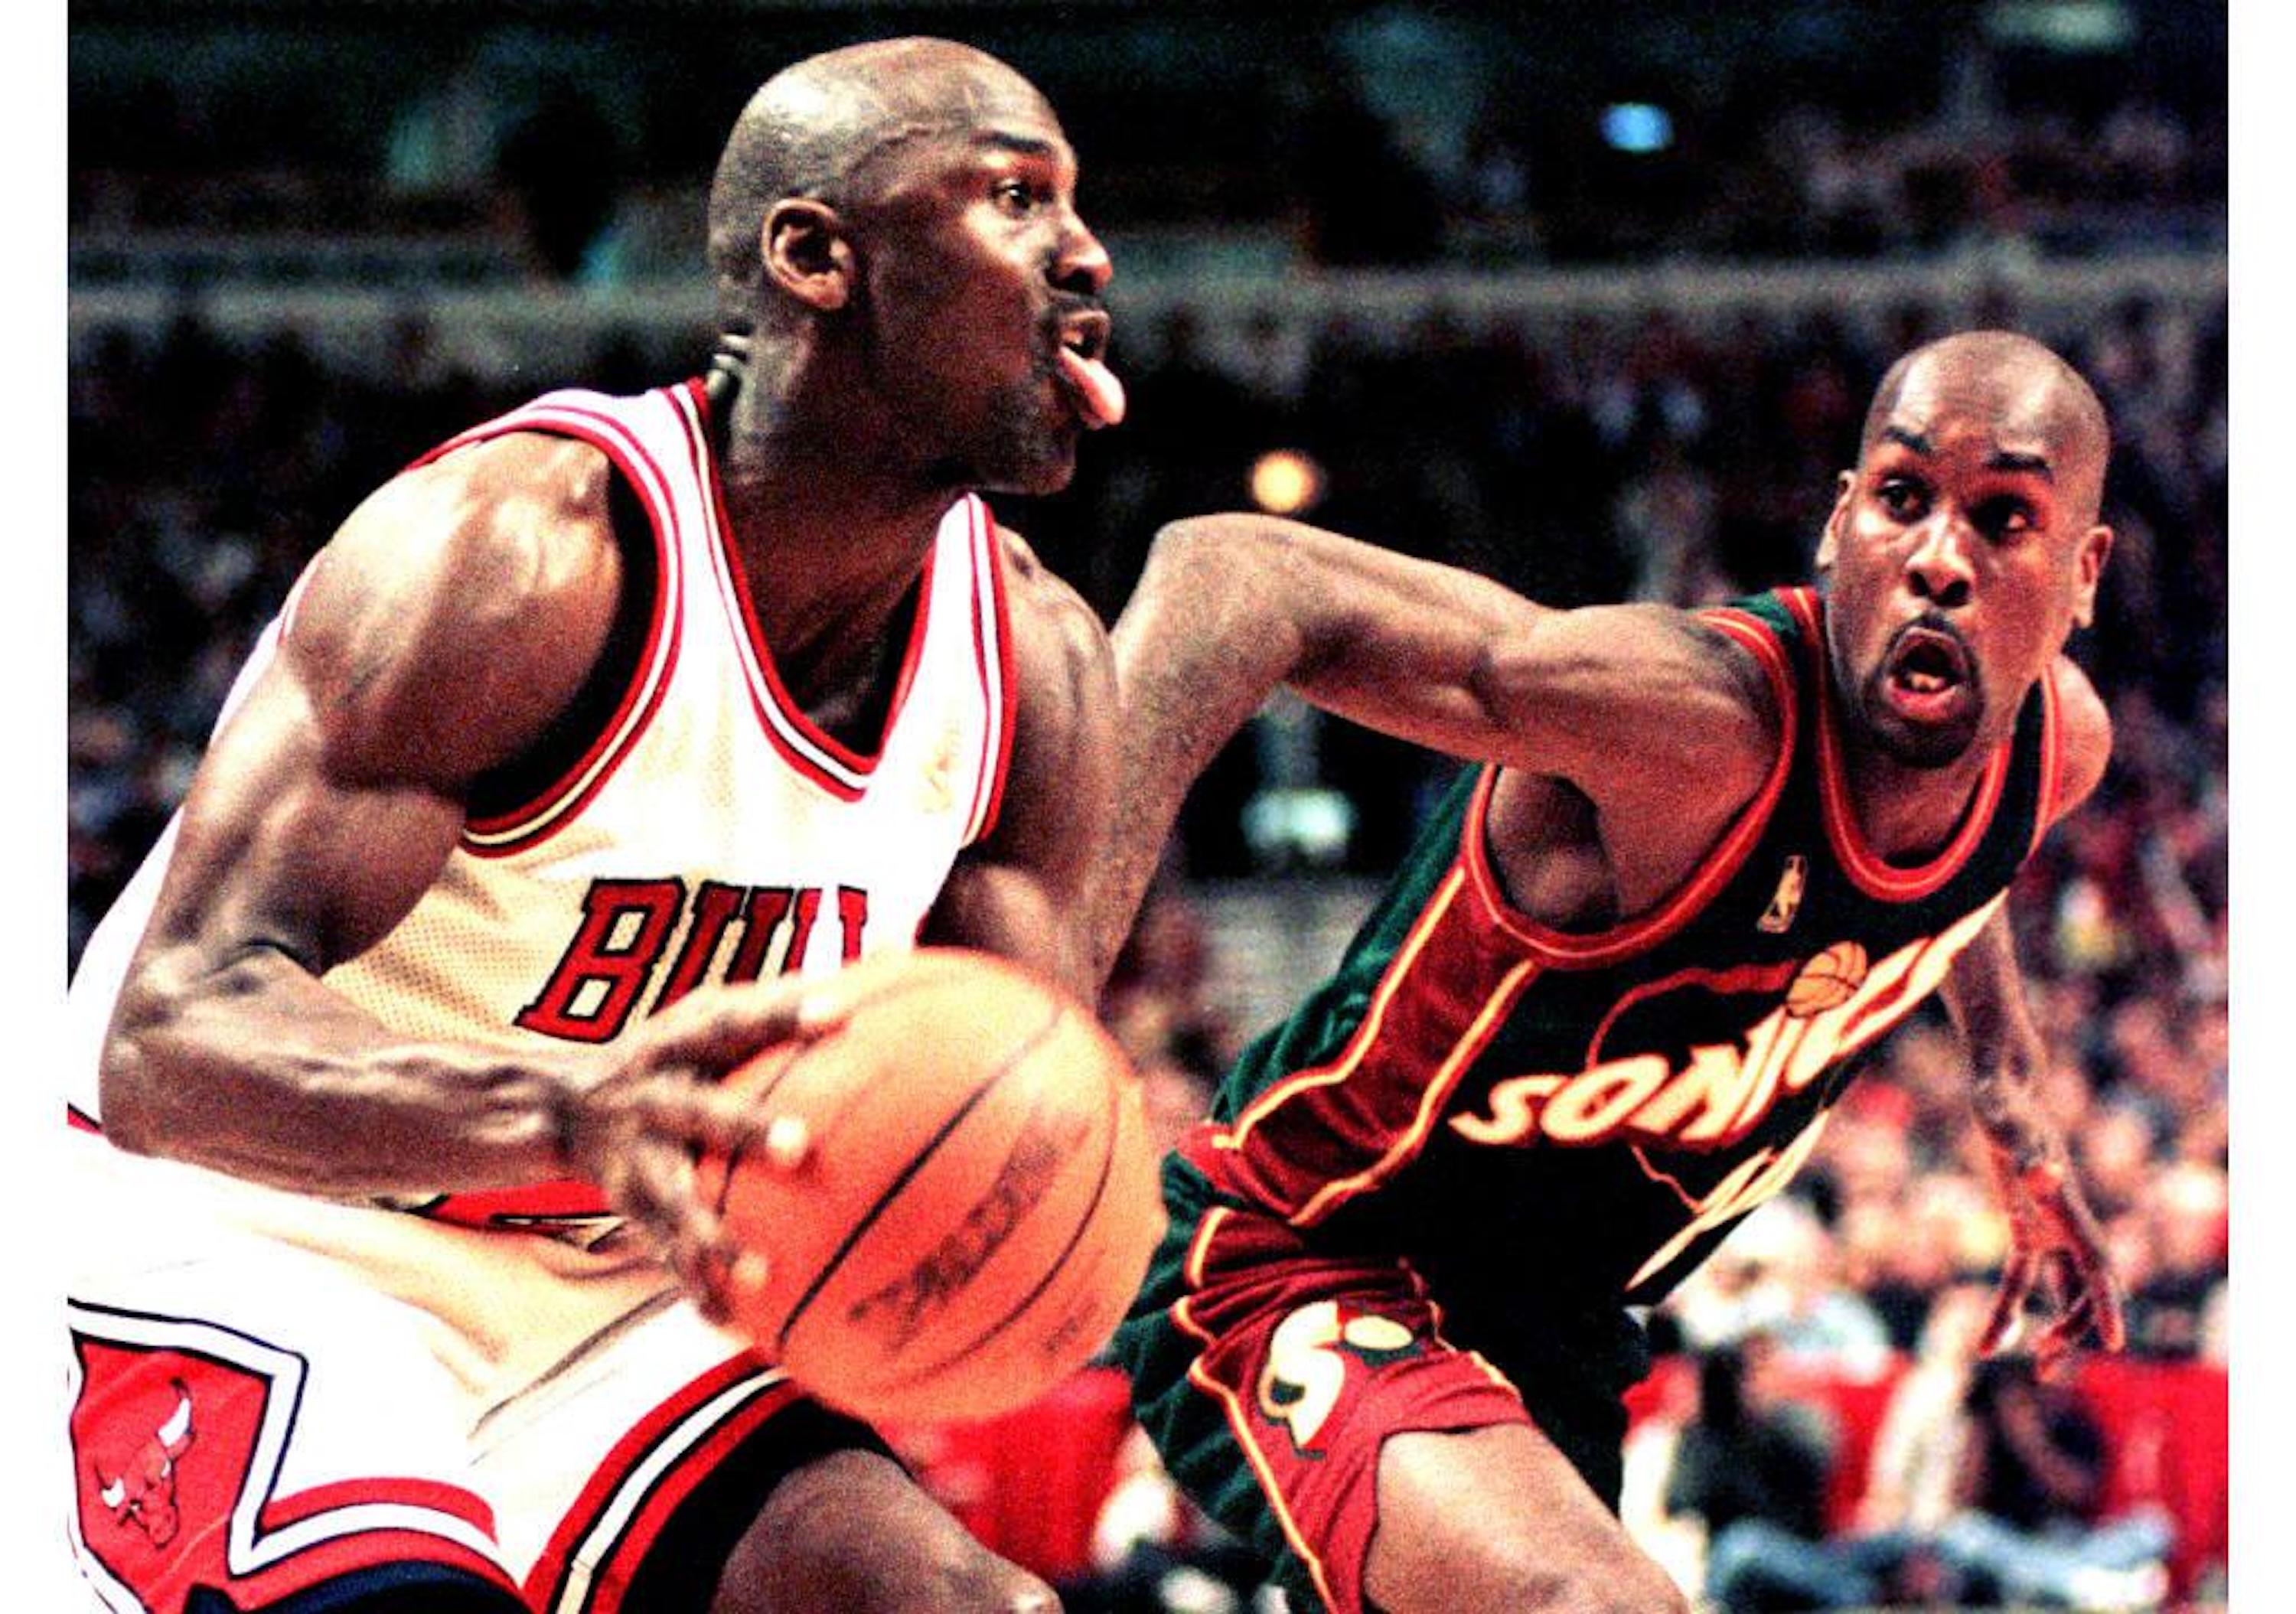 Hall of Fame point guard Gary Payton defends Chicago Bulls legend Michael Jordan